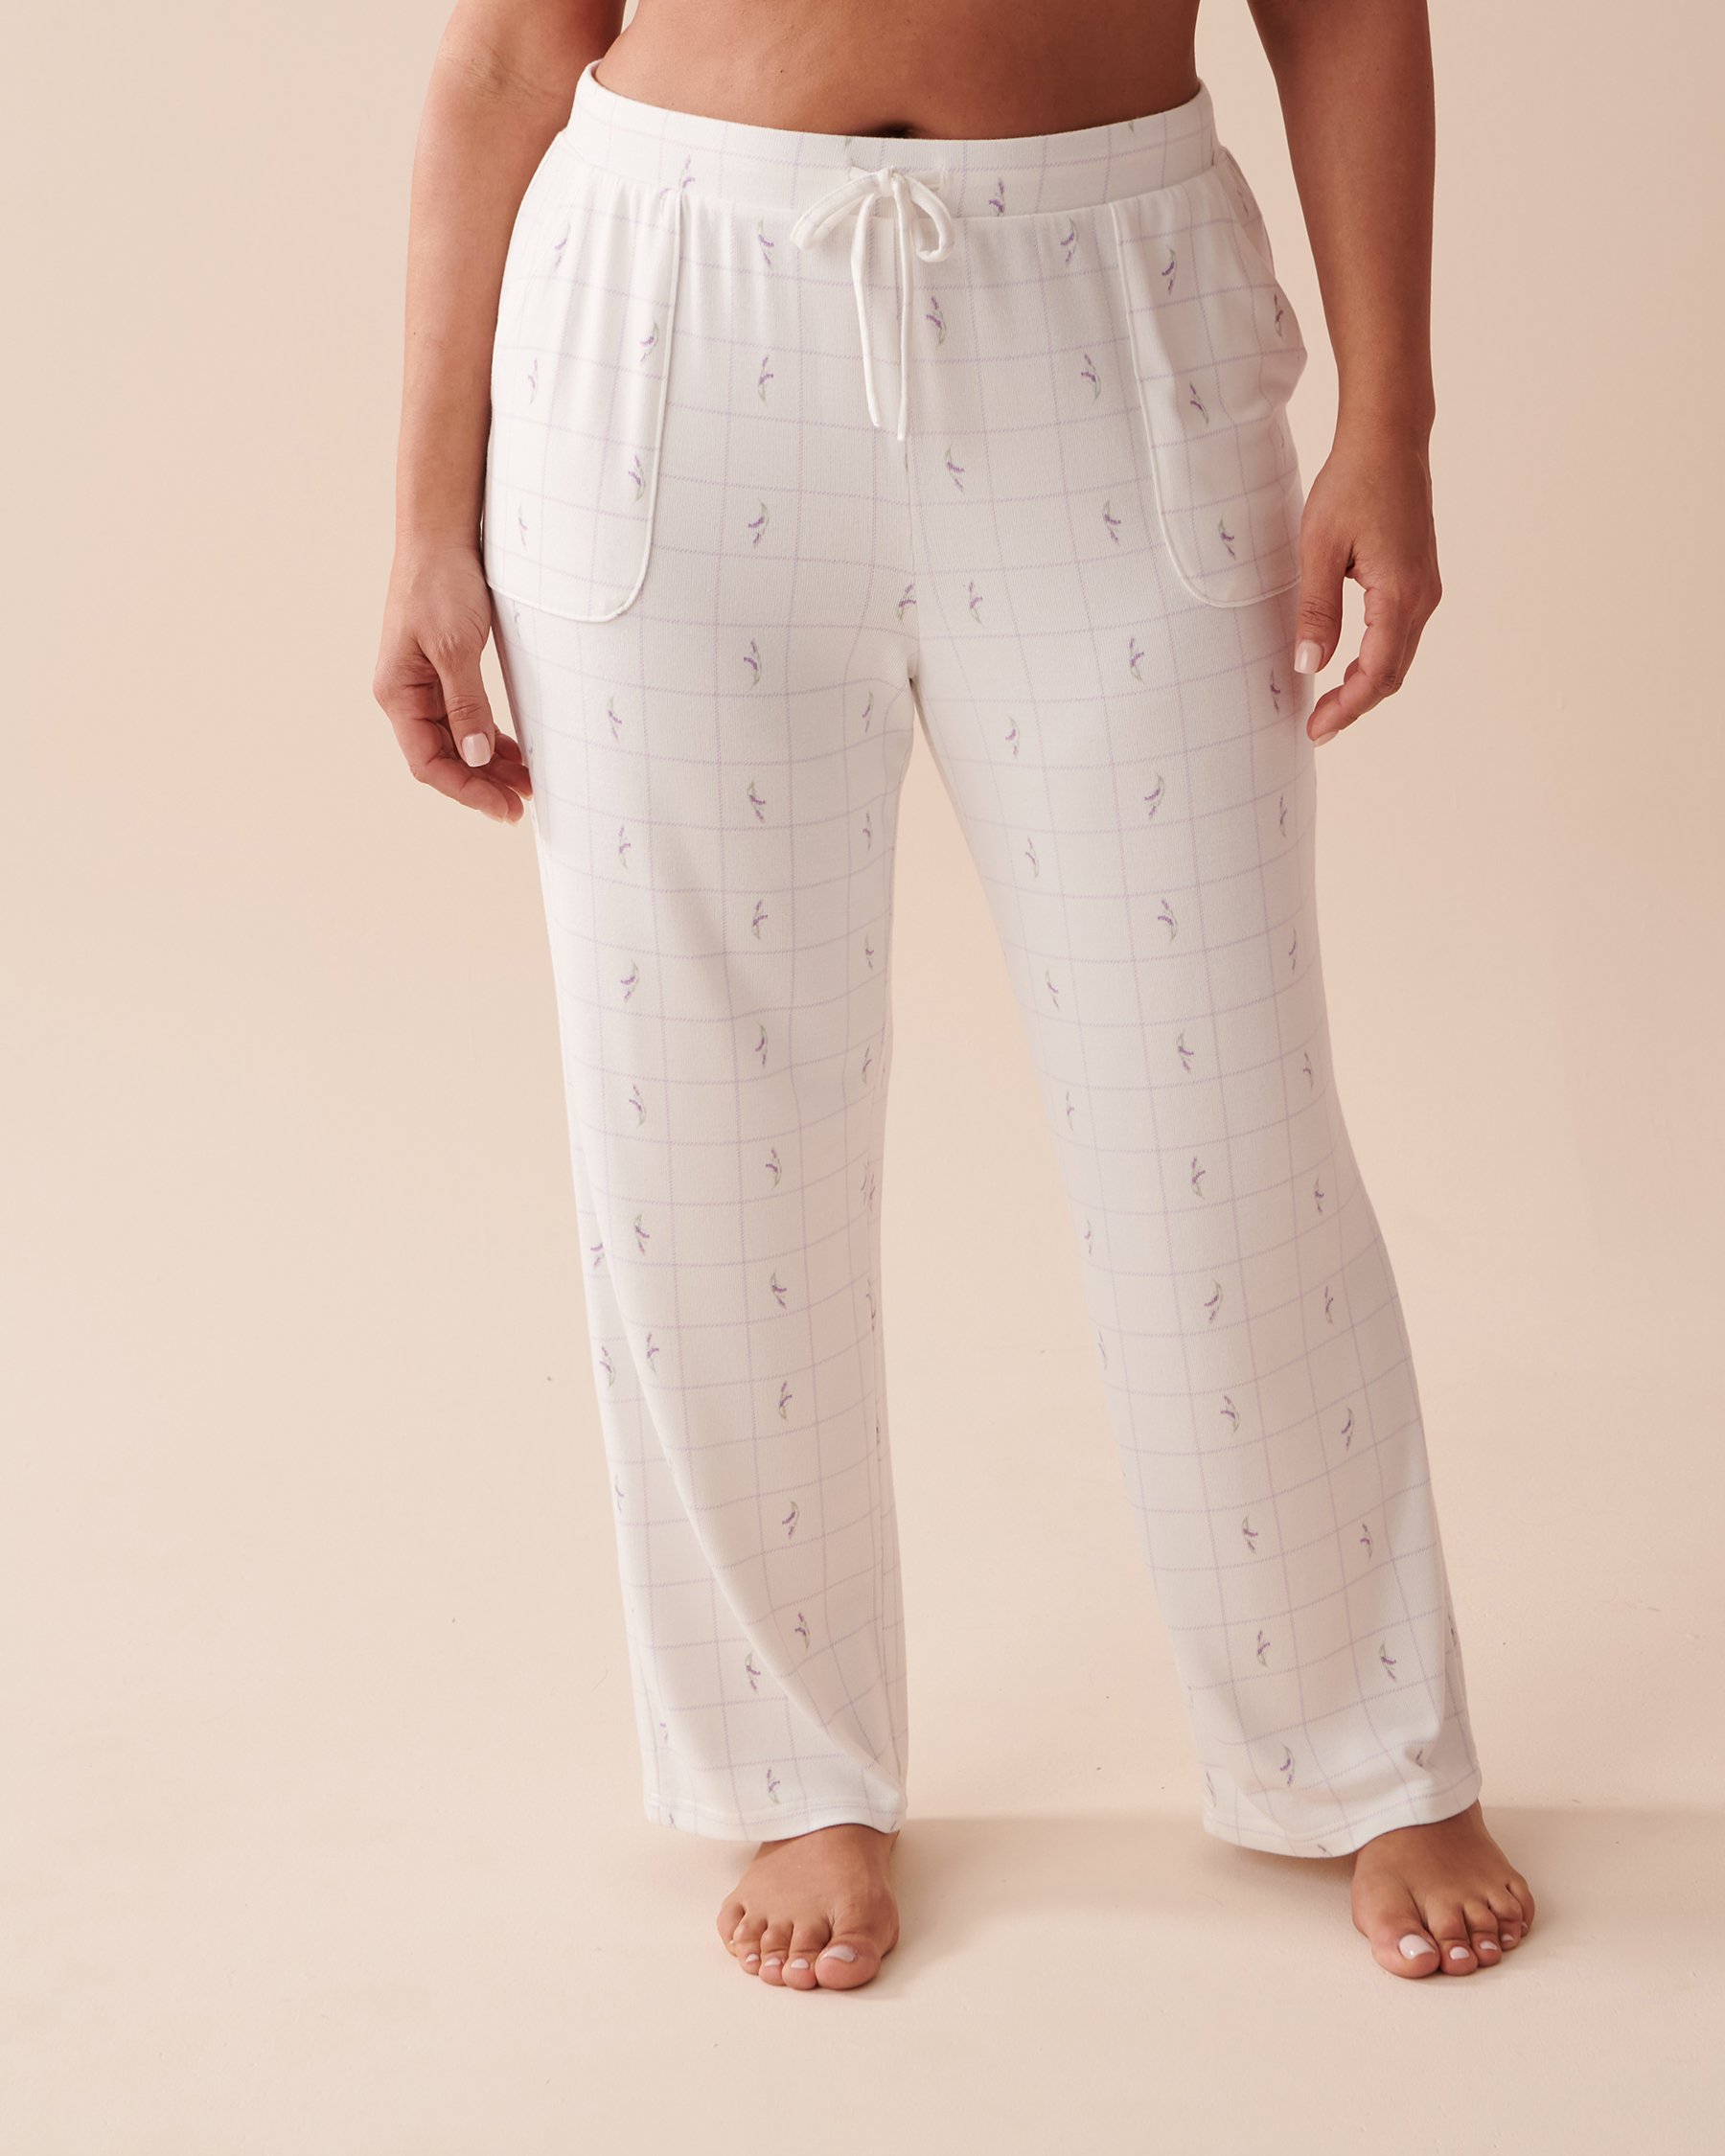 Pajama pants in Candy Canes, VENUS